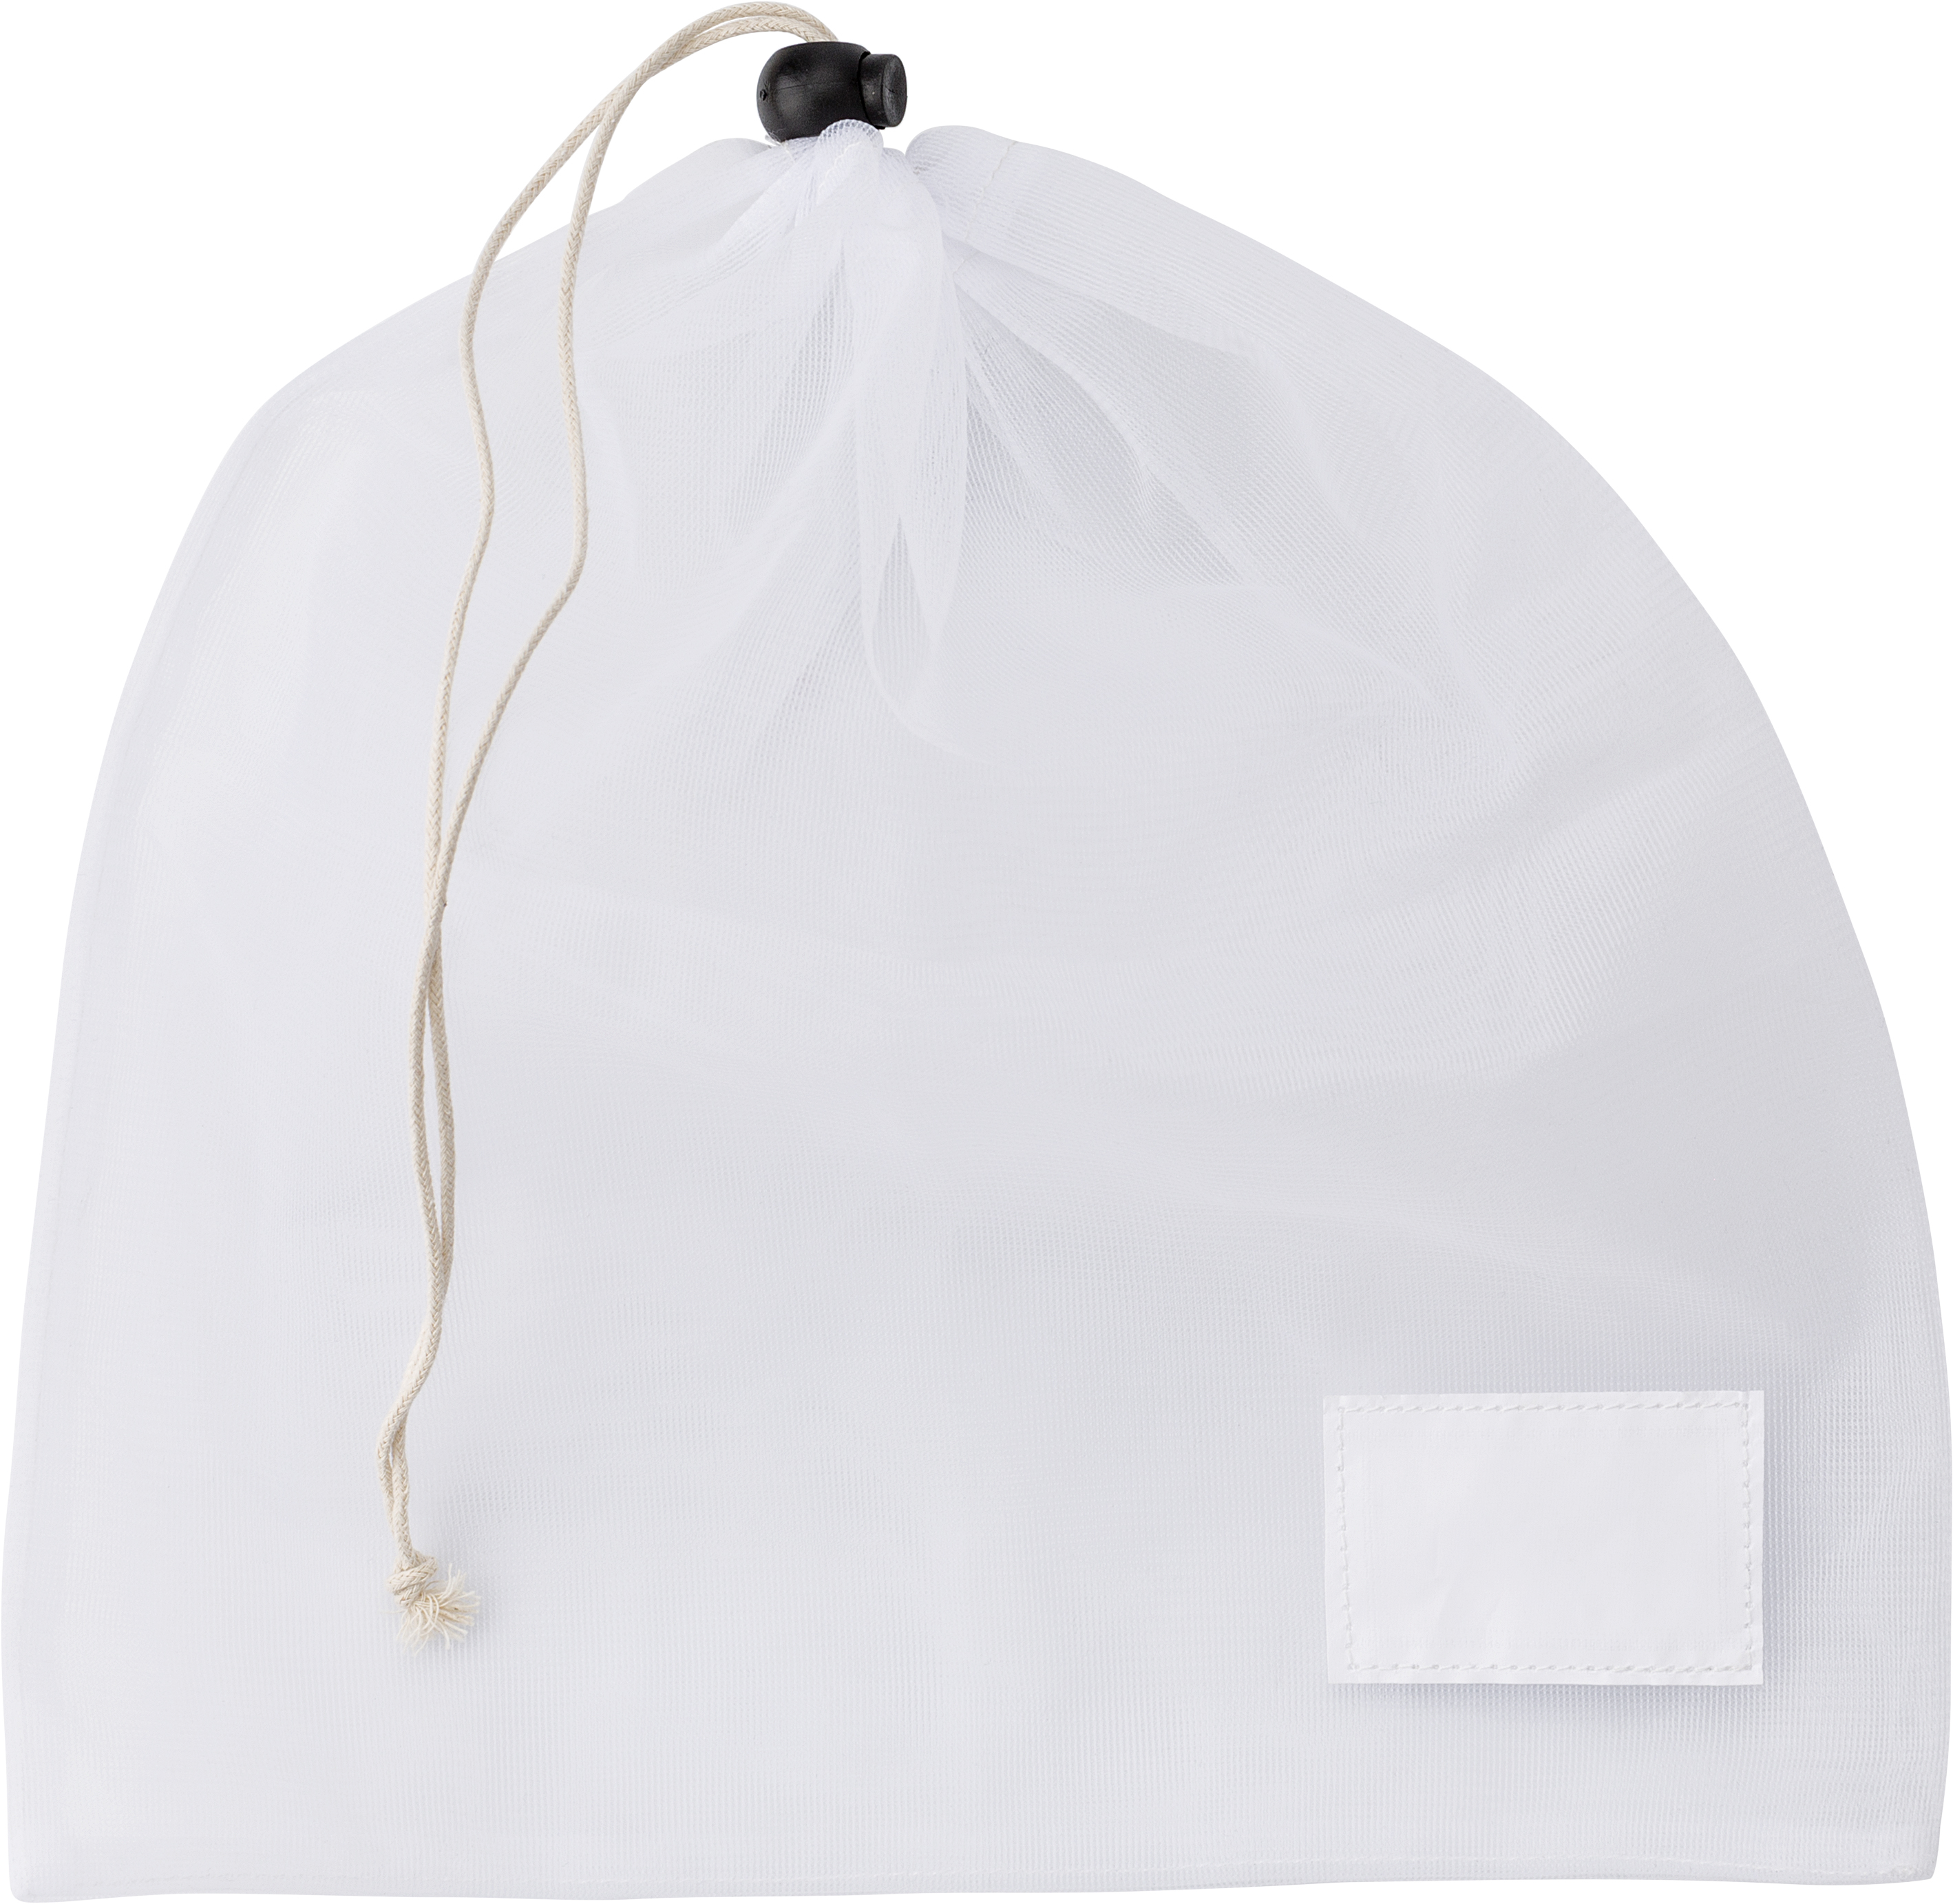 000000433172 002999999 2d090 frt pro04 2020 fal - Synthetic fibre (190D) reflective drawstring backpack